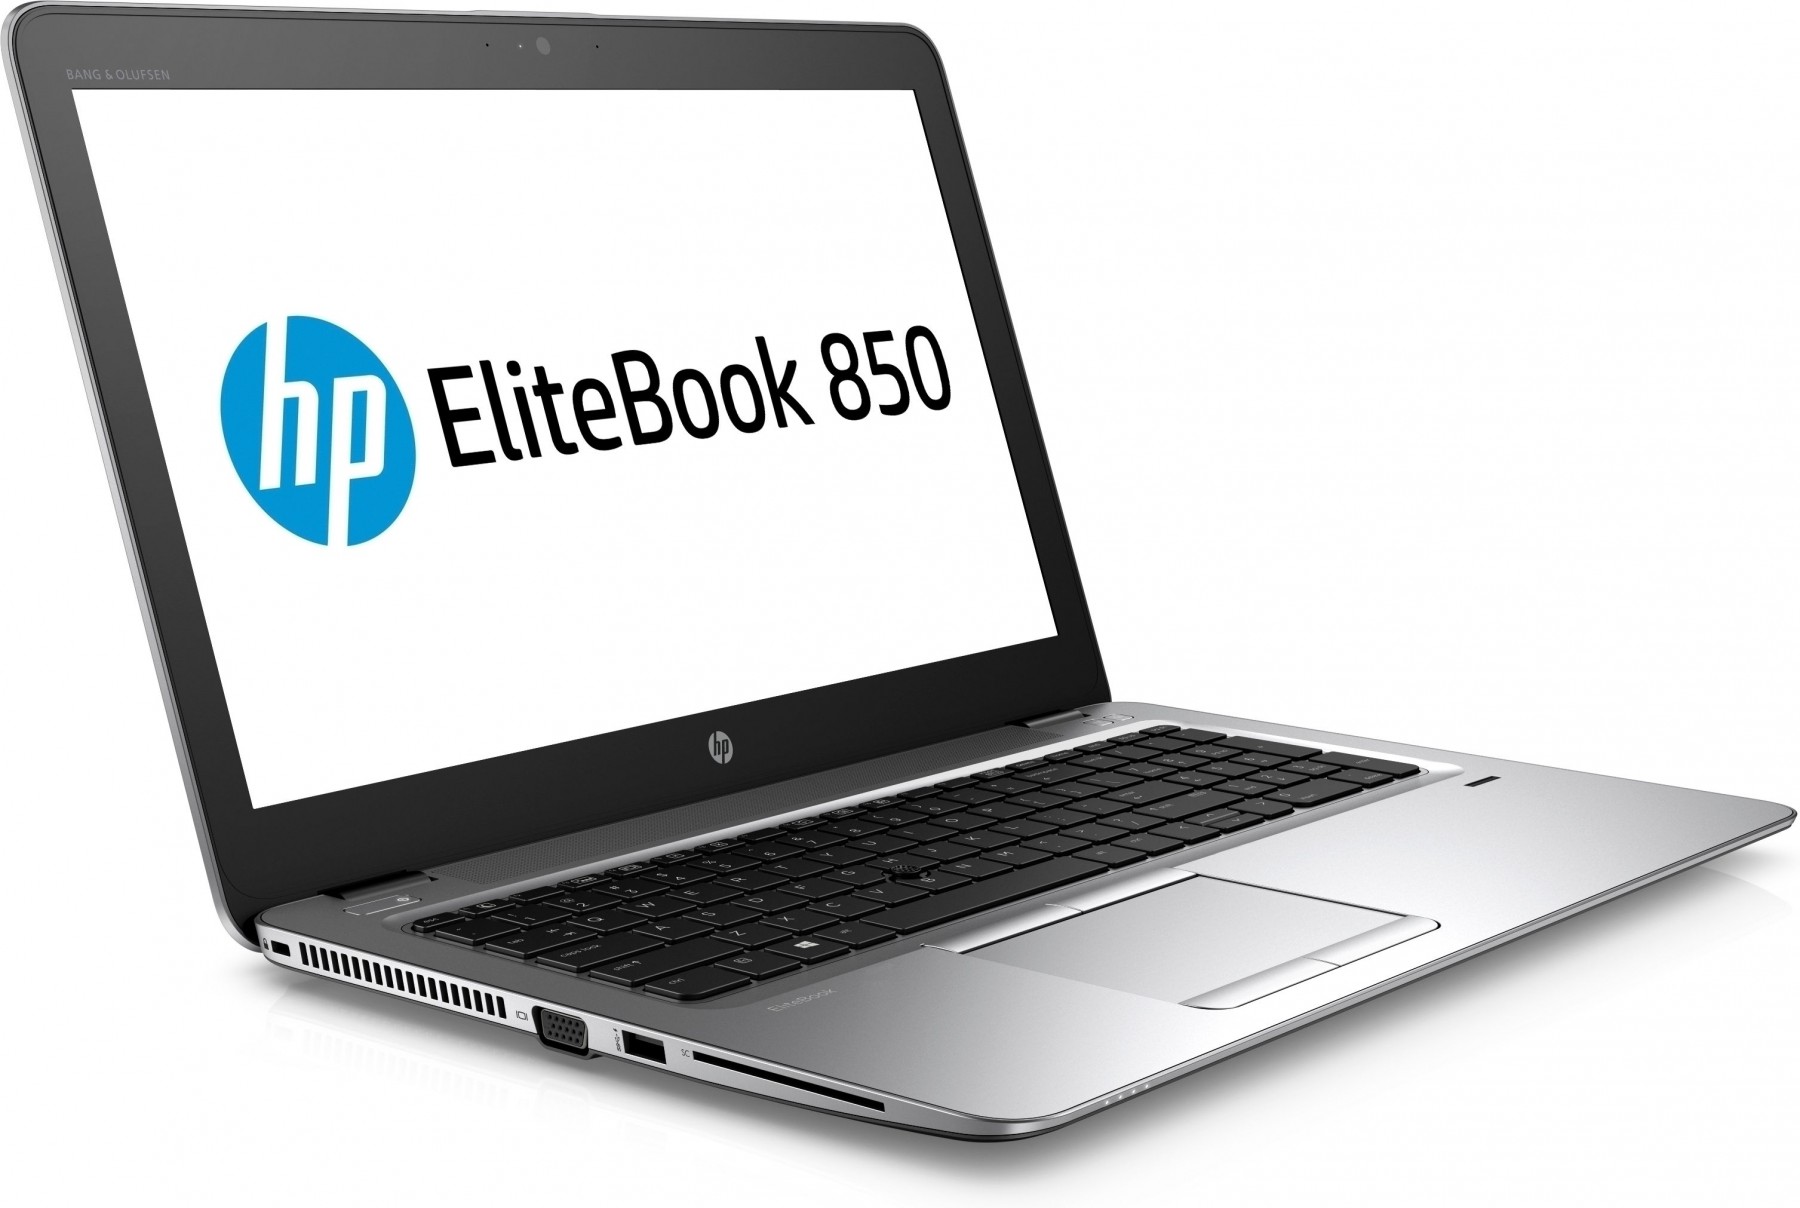 HP EliteBook 850 G3 Intel Core i5 6200 2.2Ghz 8GB RAM 256GB SDD 15.6" screen No Optical Drive Windows 10 Professional (64 bit)